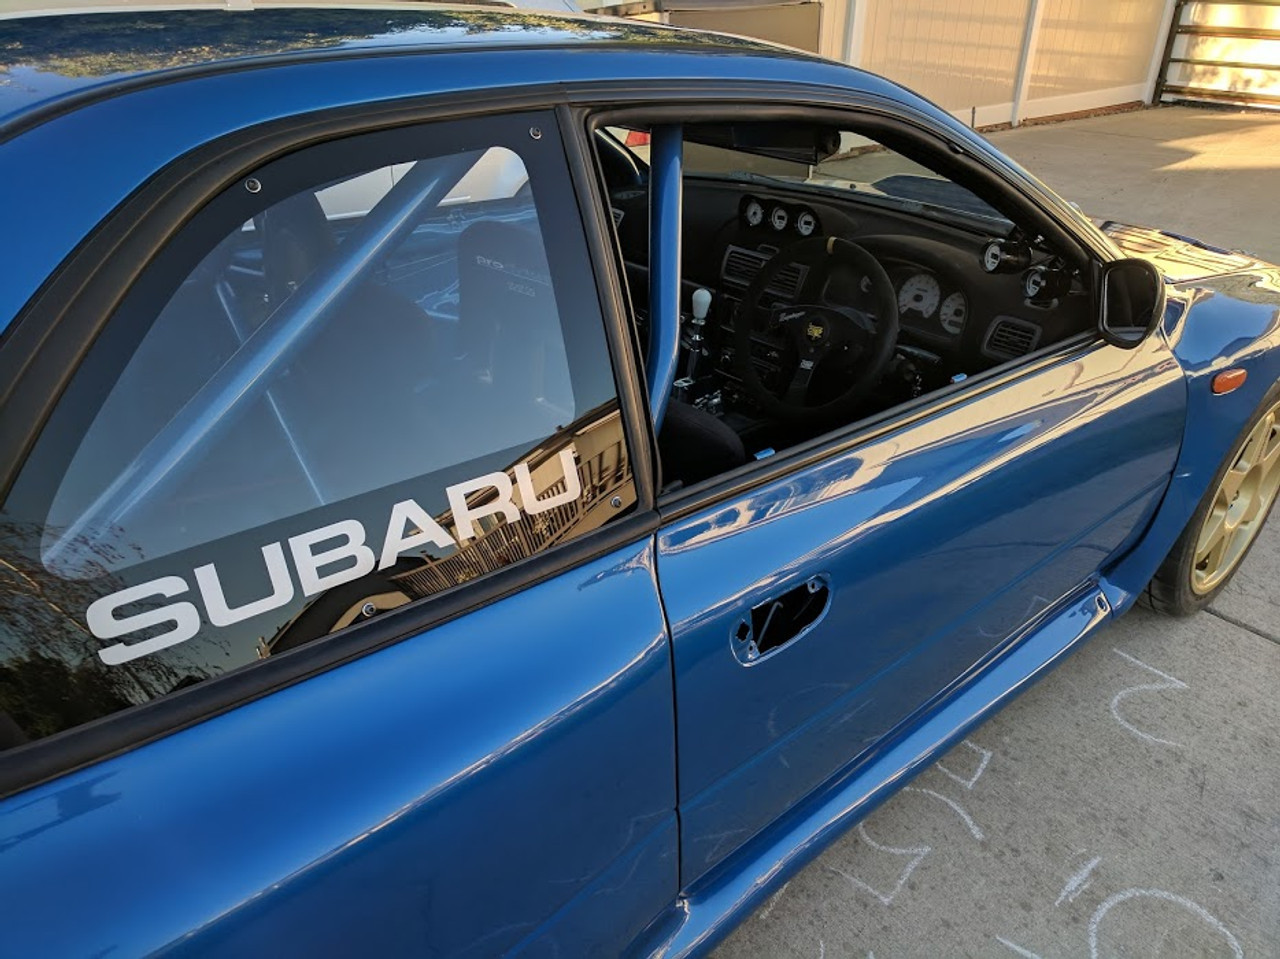 6ocRALLYSPORT GC Subaru Racing Abrasion Resistant Polycarbonate Rear Windows (PAIR)  - Impreza 93-01 Coupe